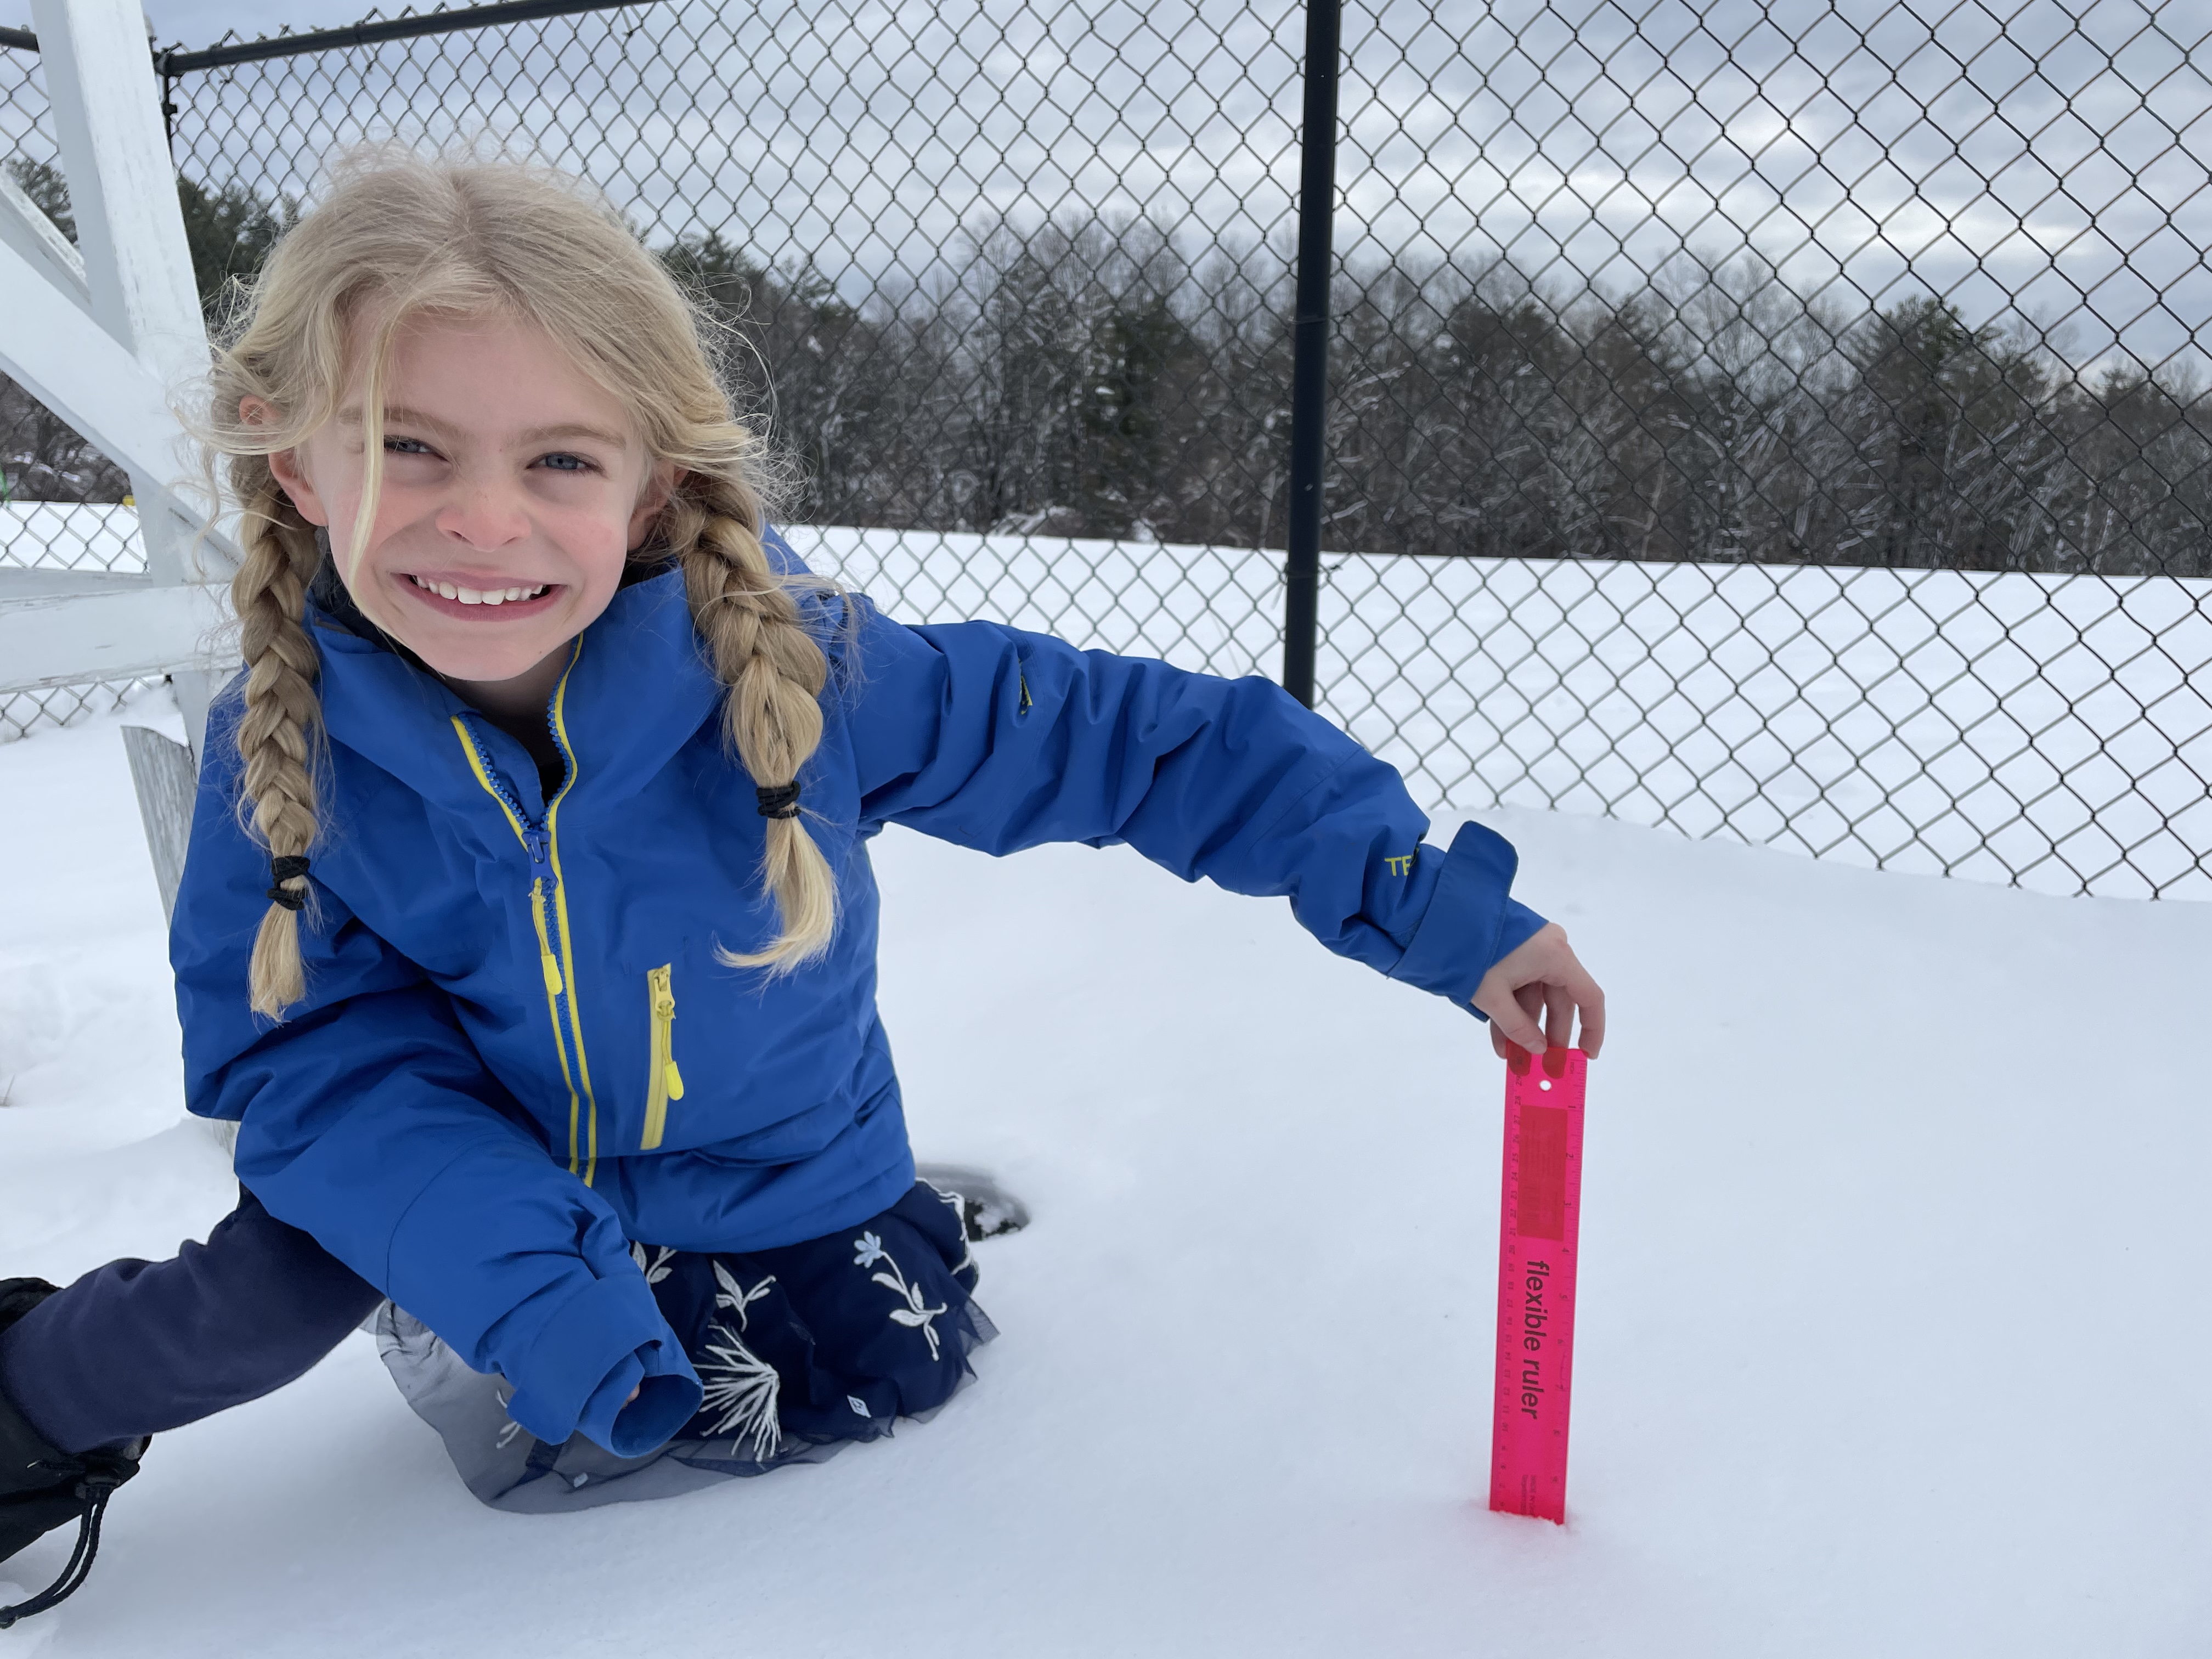 Student measures snow depth